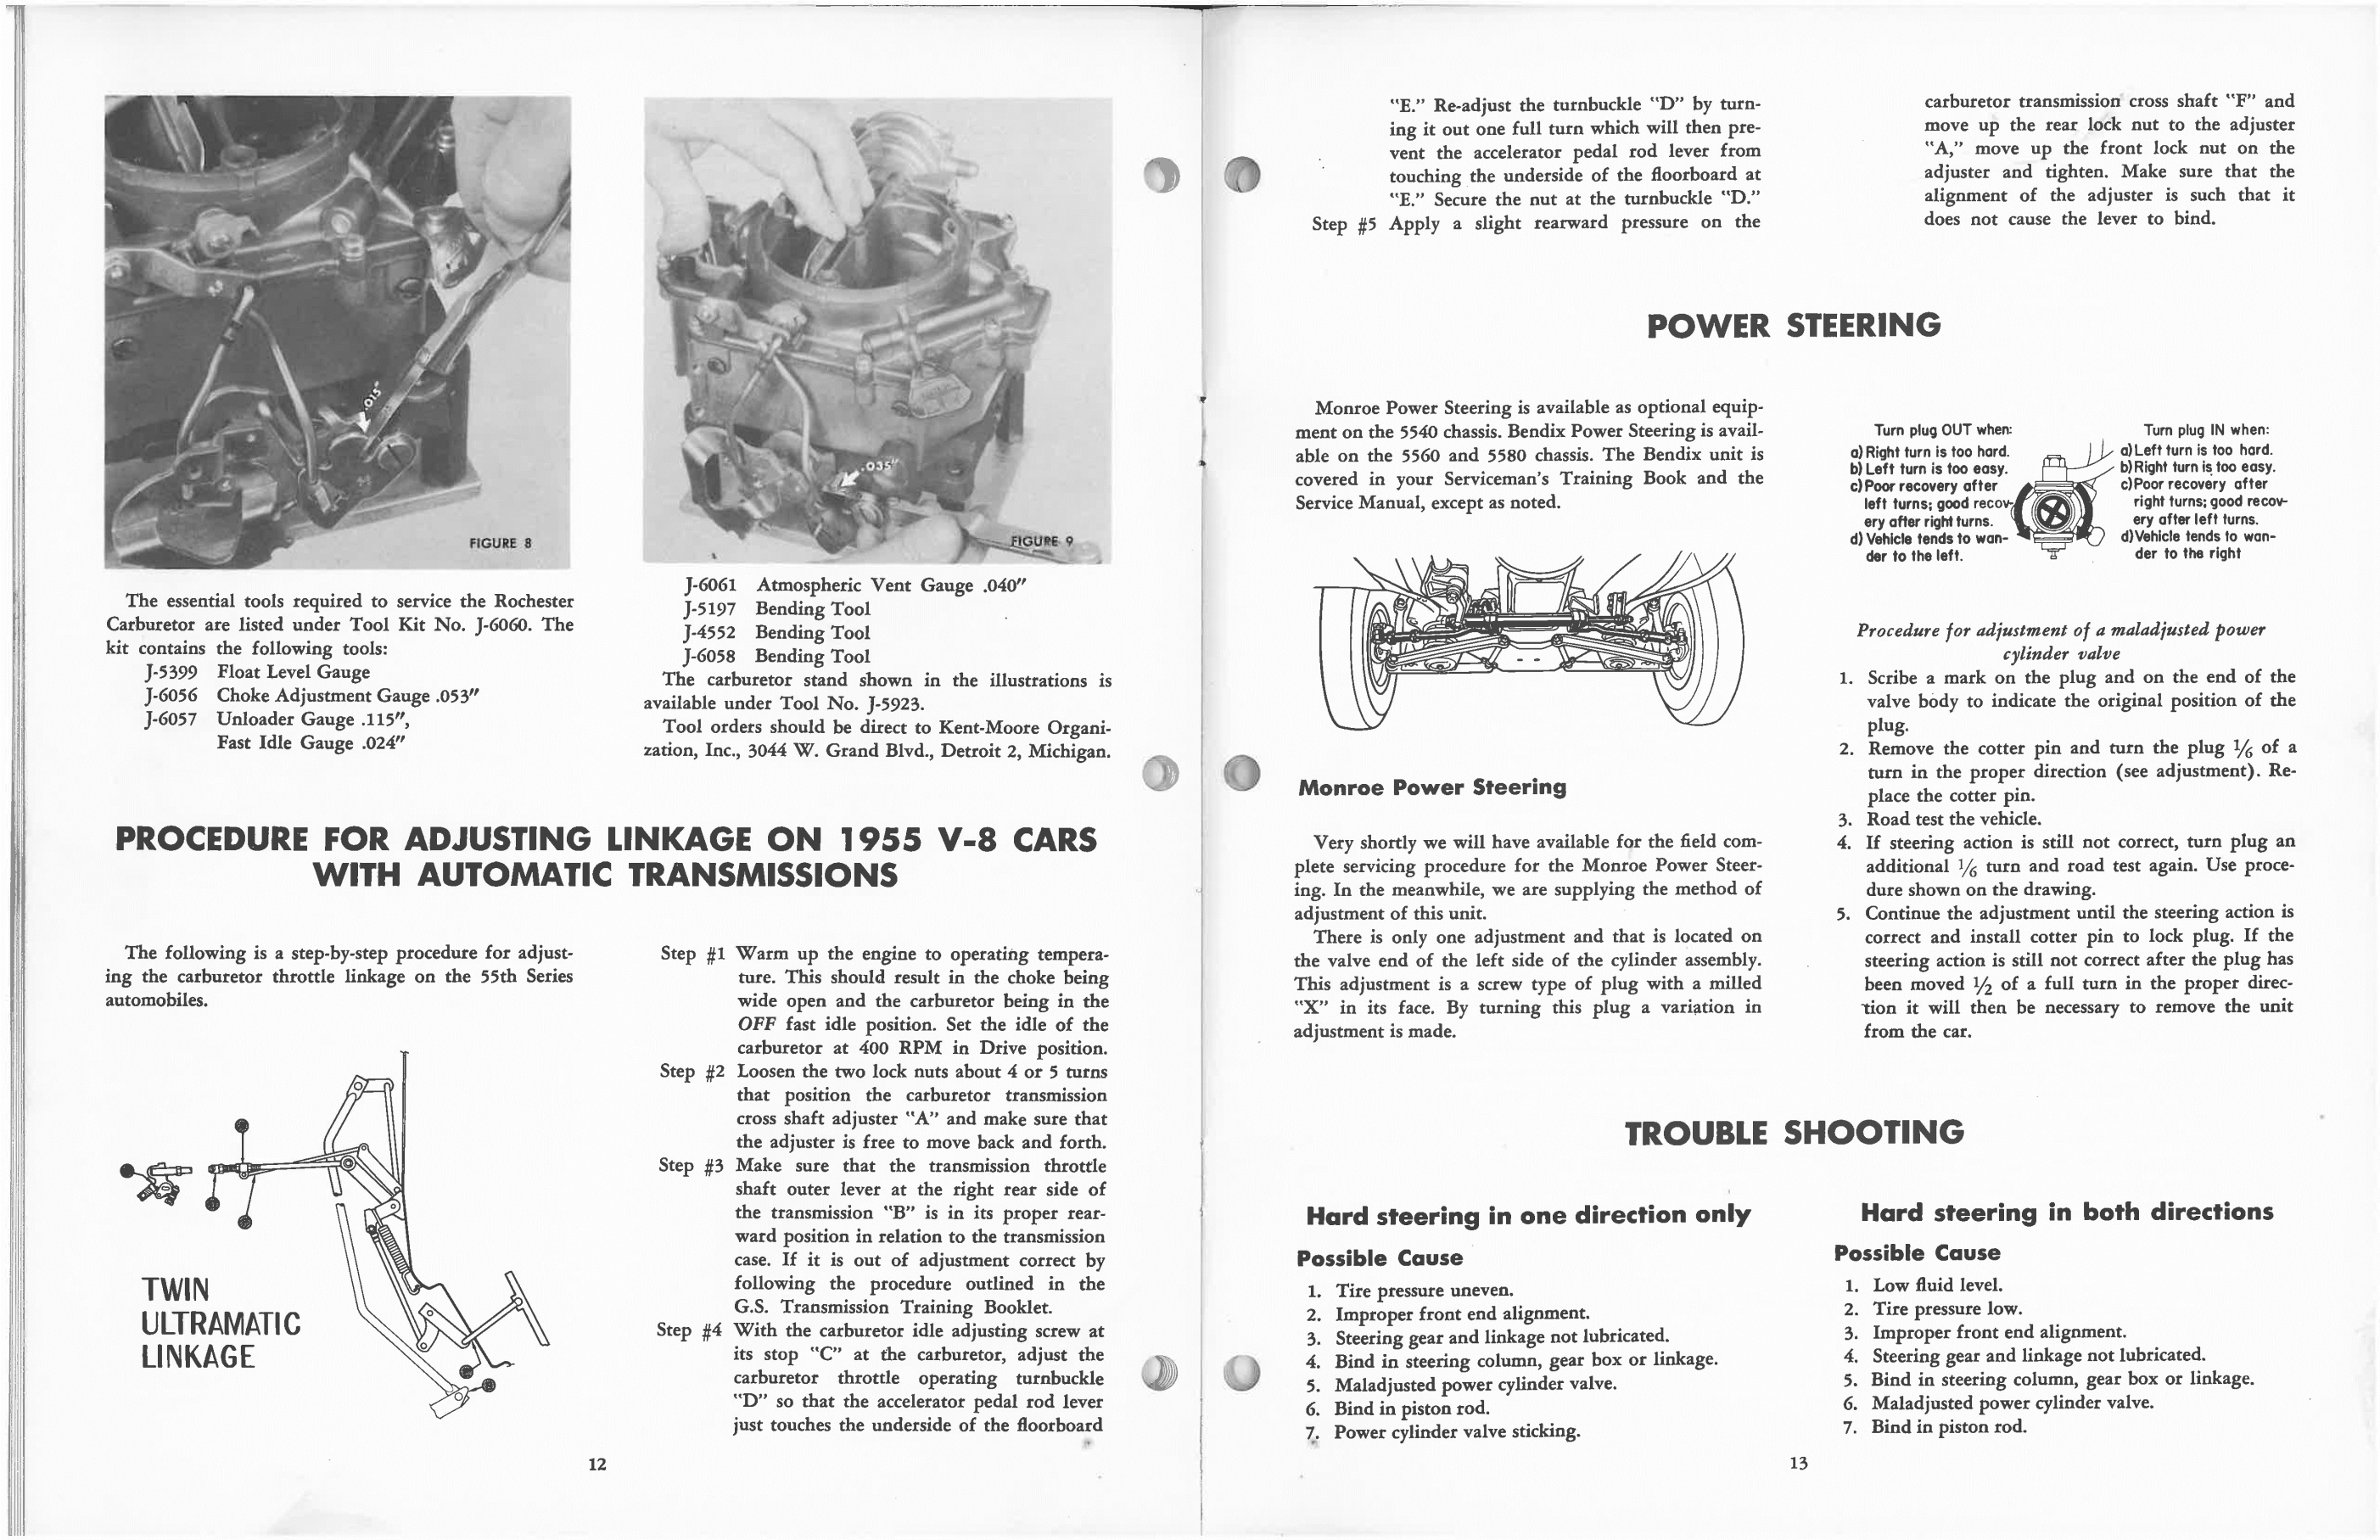 1955_Packard_Sevicemens_Training_Book-12-13